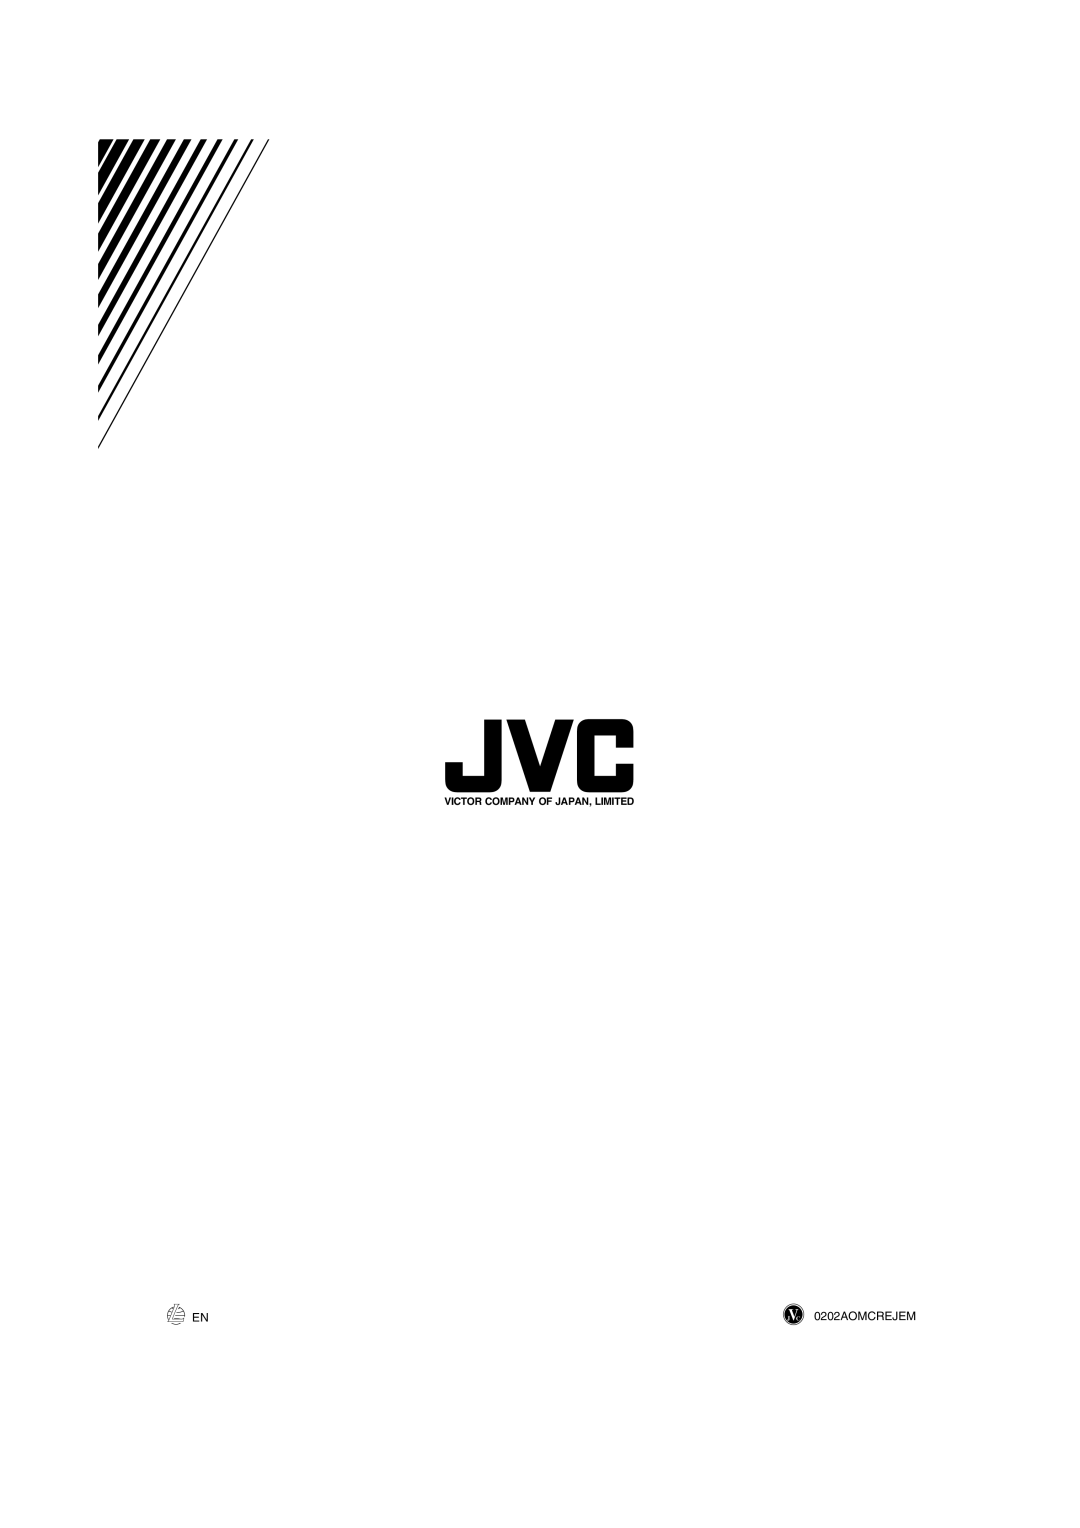 JVC XL-FZ700 manual JVC 0202AOMCREJEM, Victor Company Of Japan, Limited 